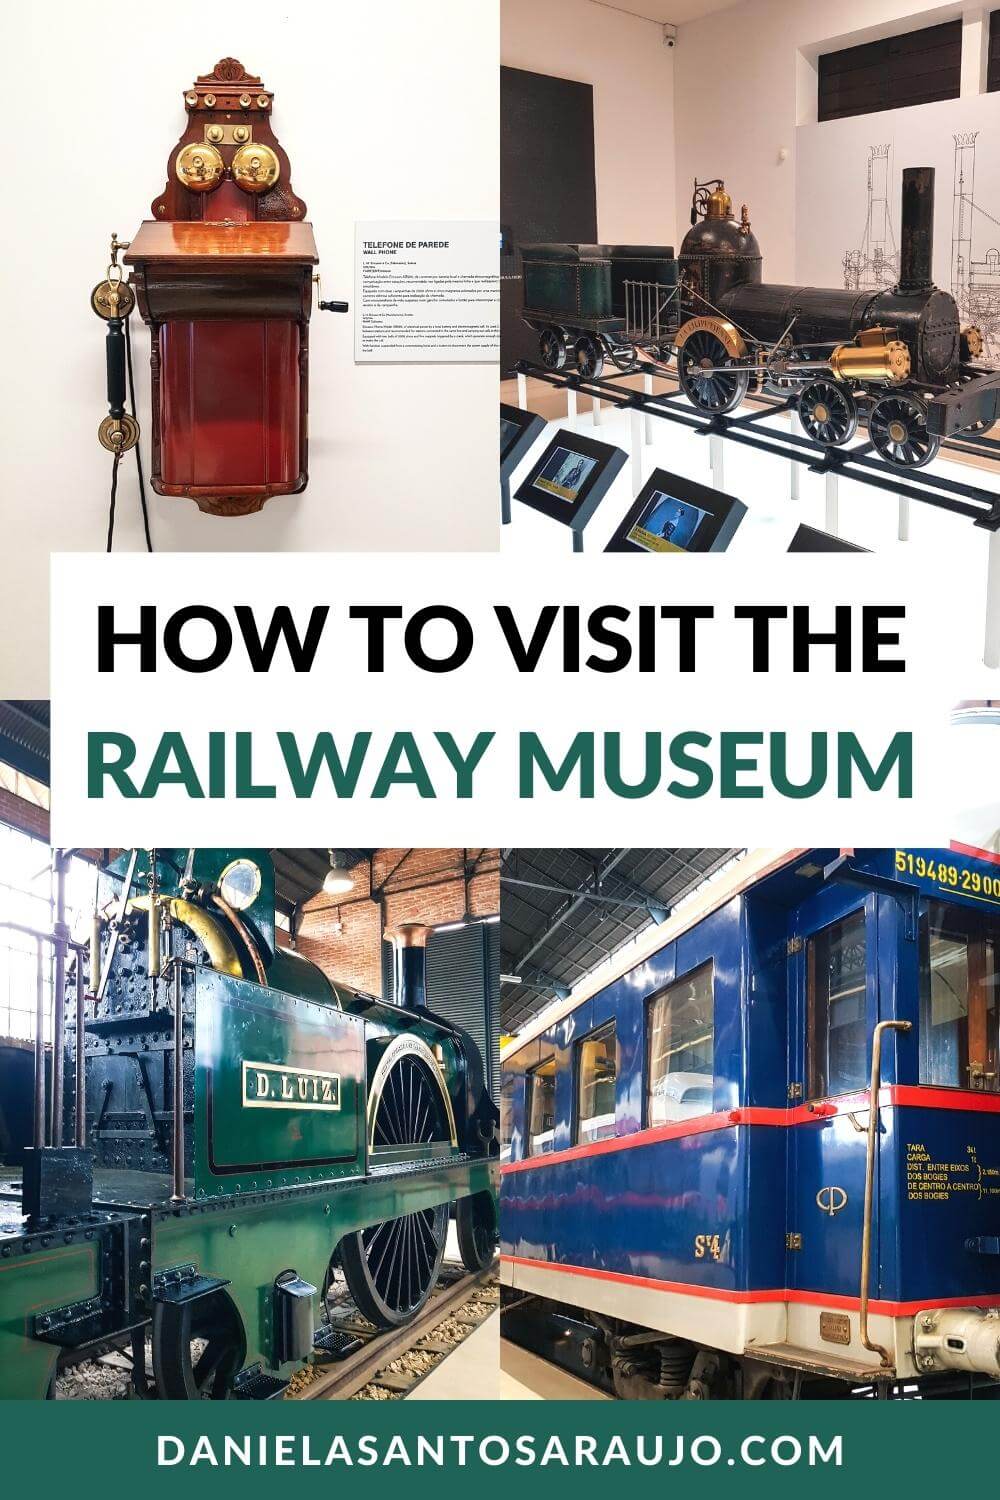 National Railway Museum